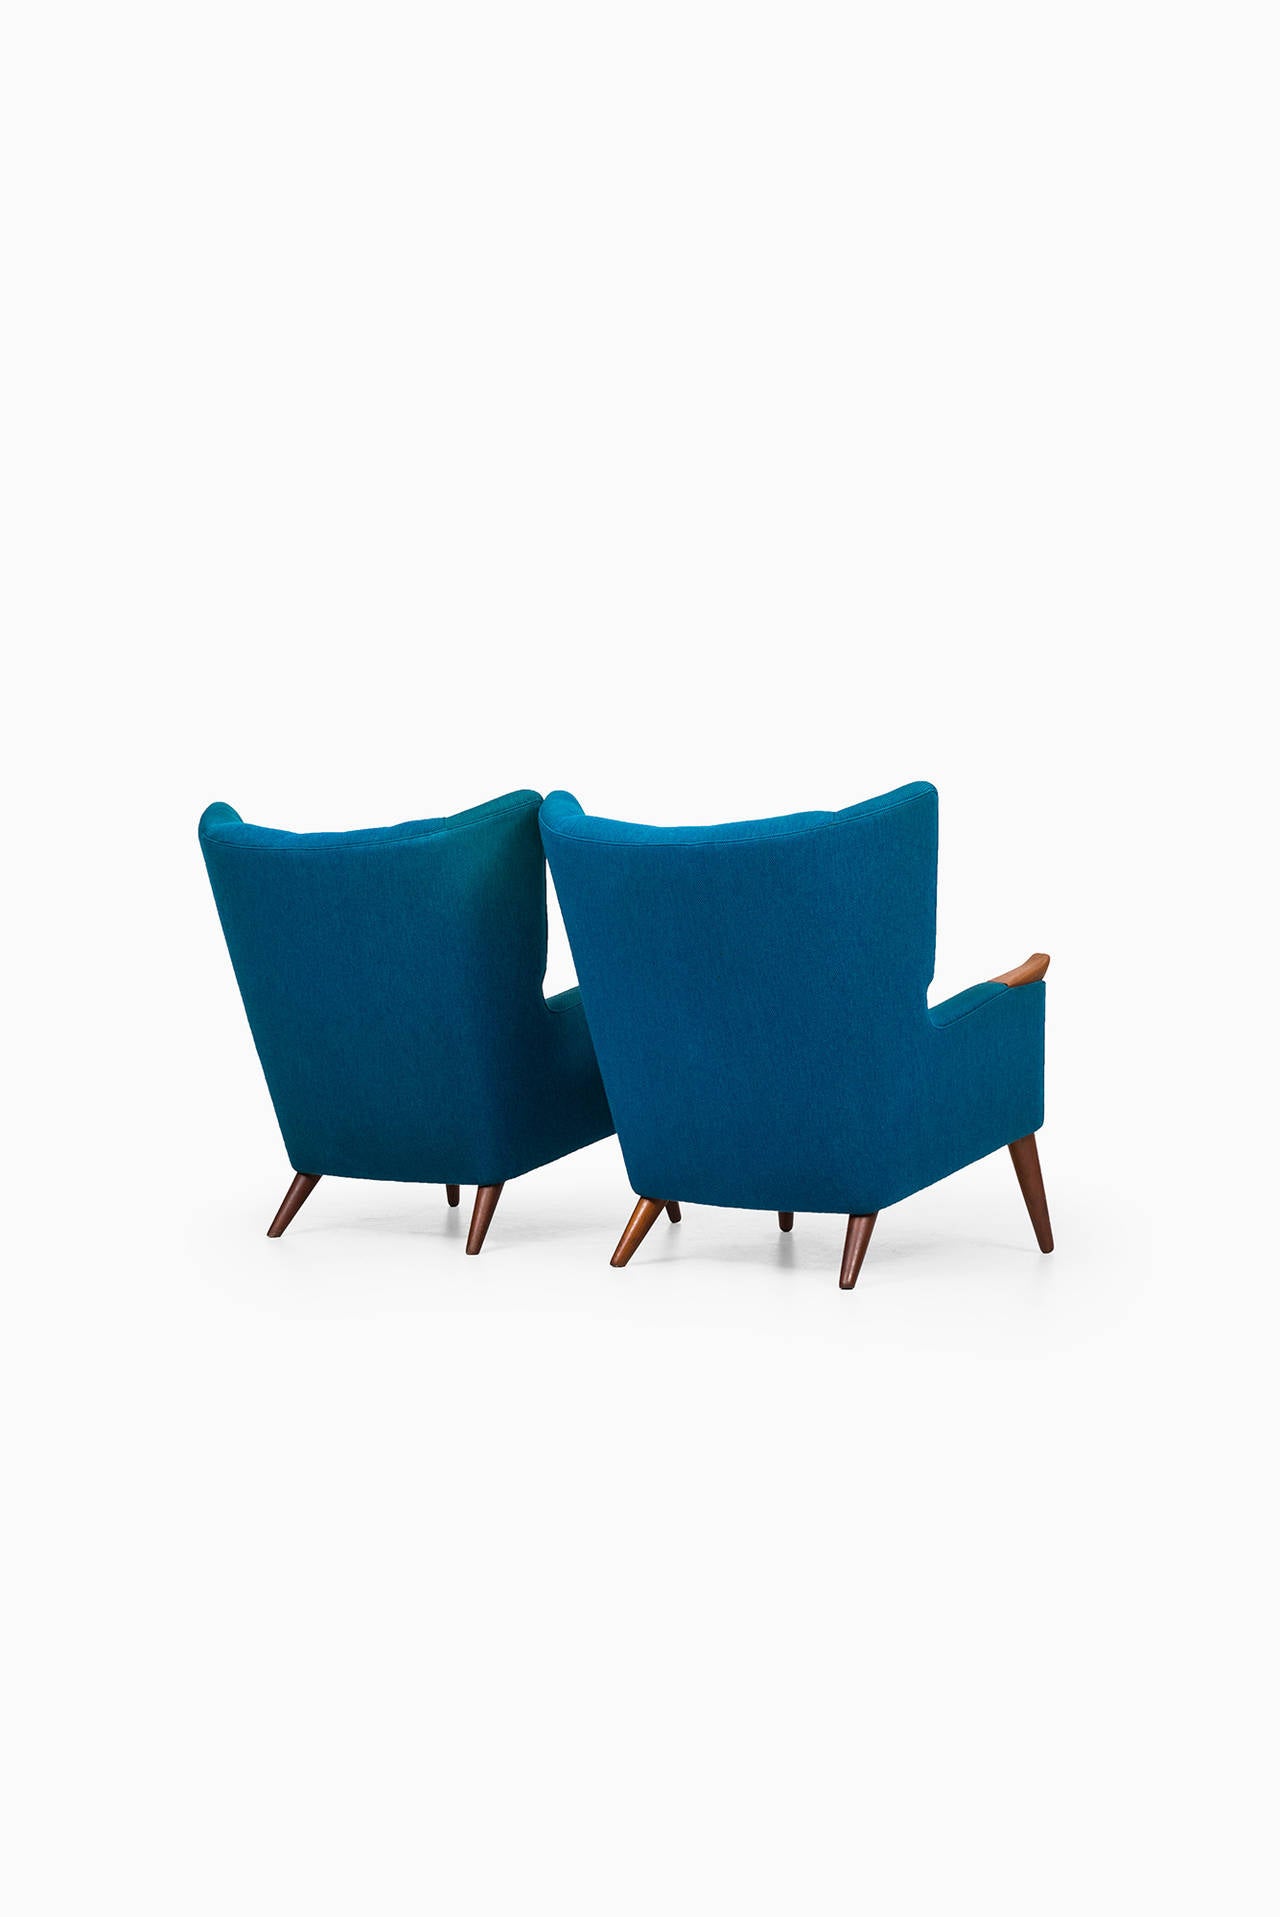 Fabric Kurt Østervig Easy Chairs by Rolschau Møbler in Denmark